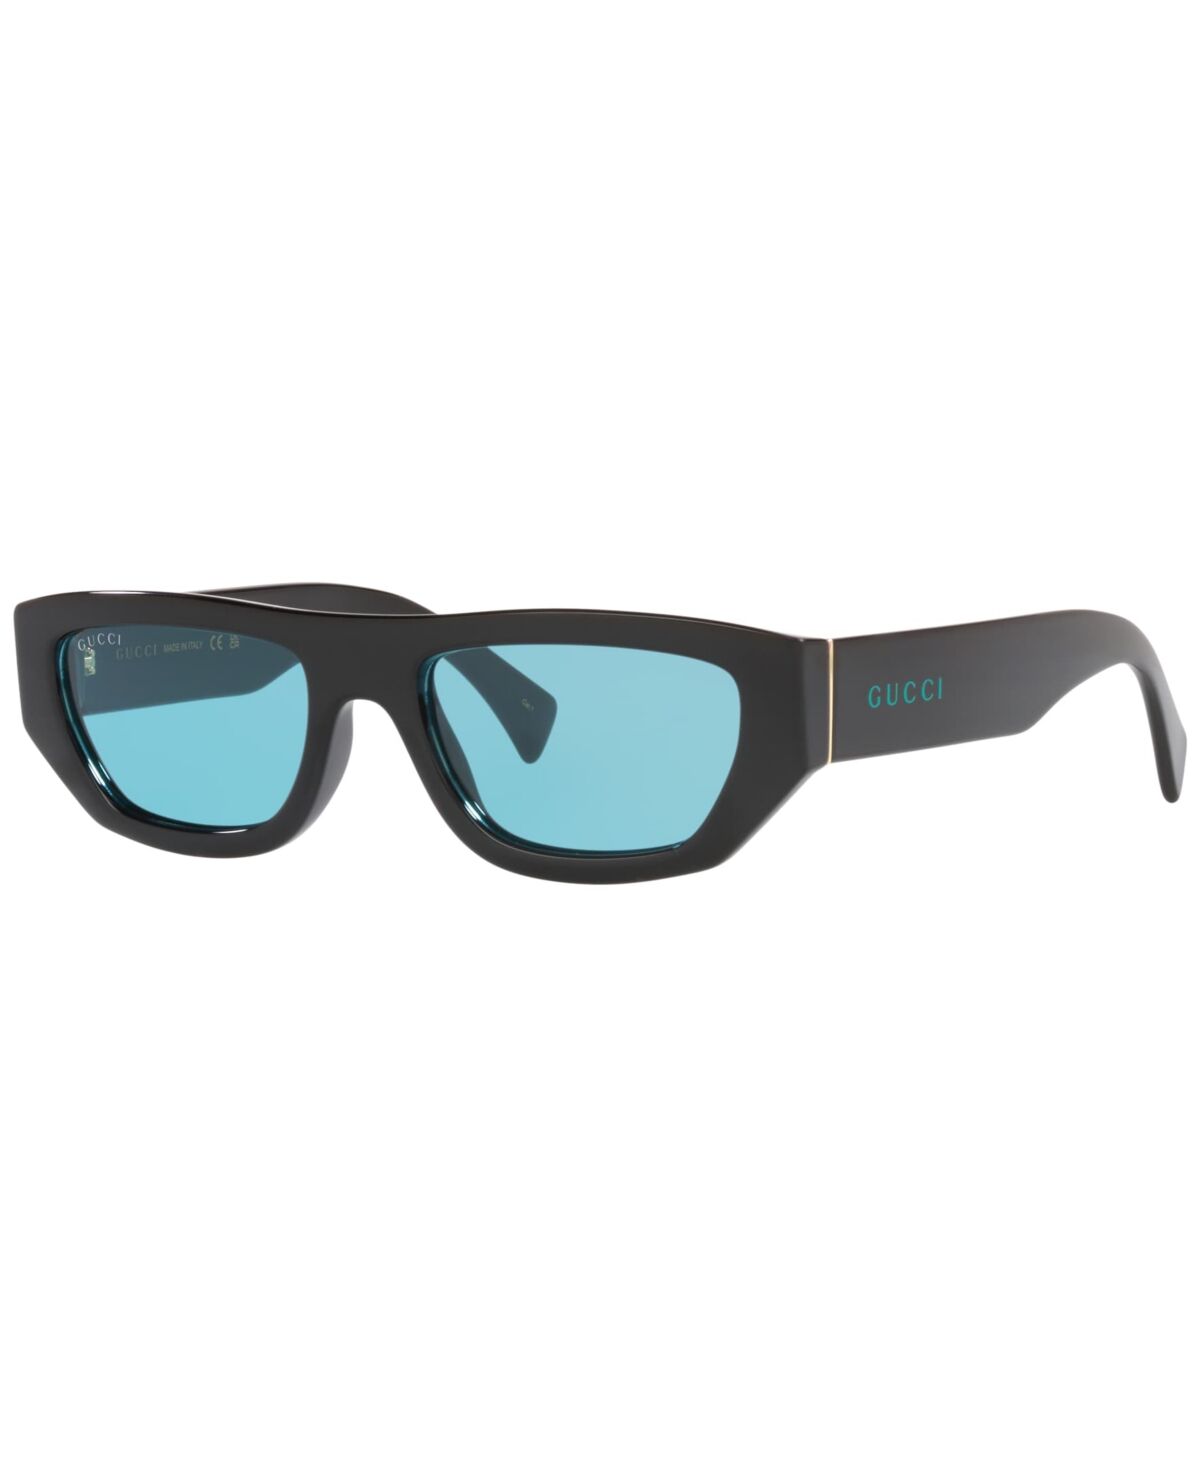 Gucci Men's Sunglasses, GC00188253-x - Black, Black